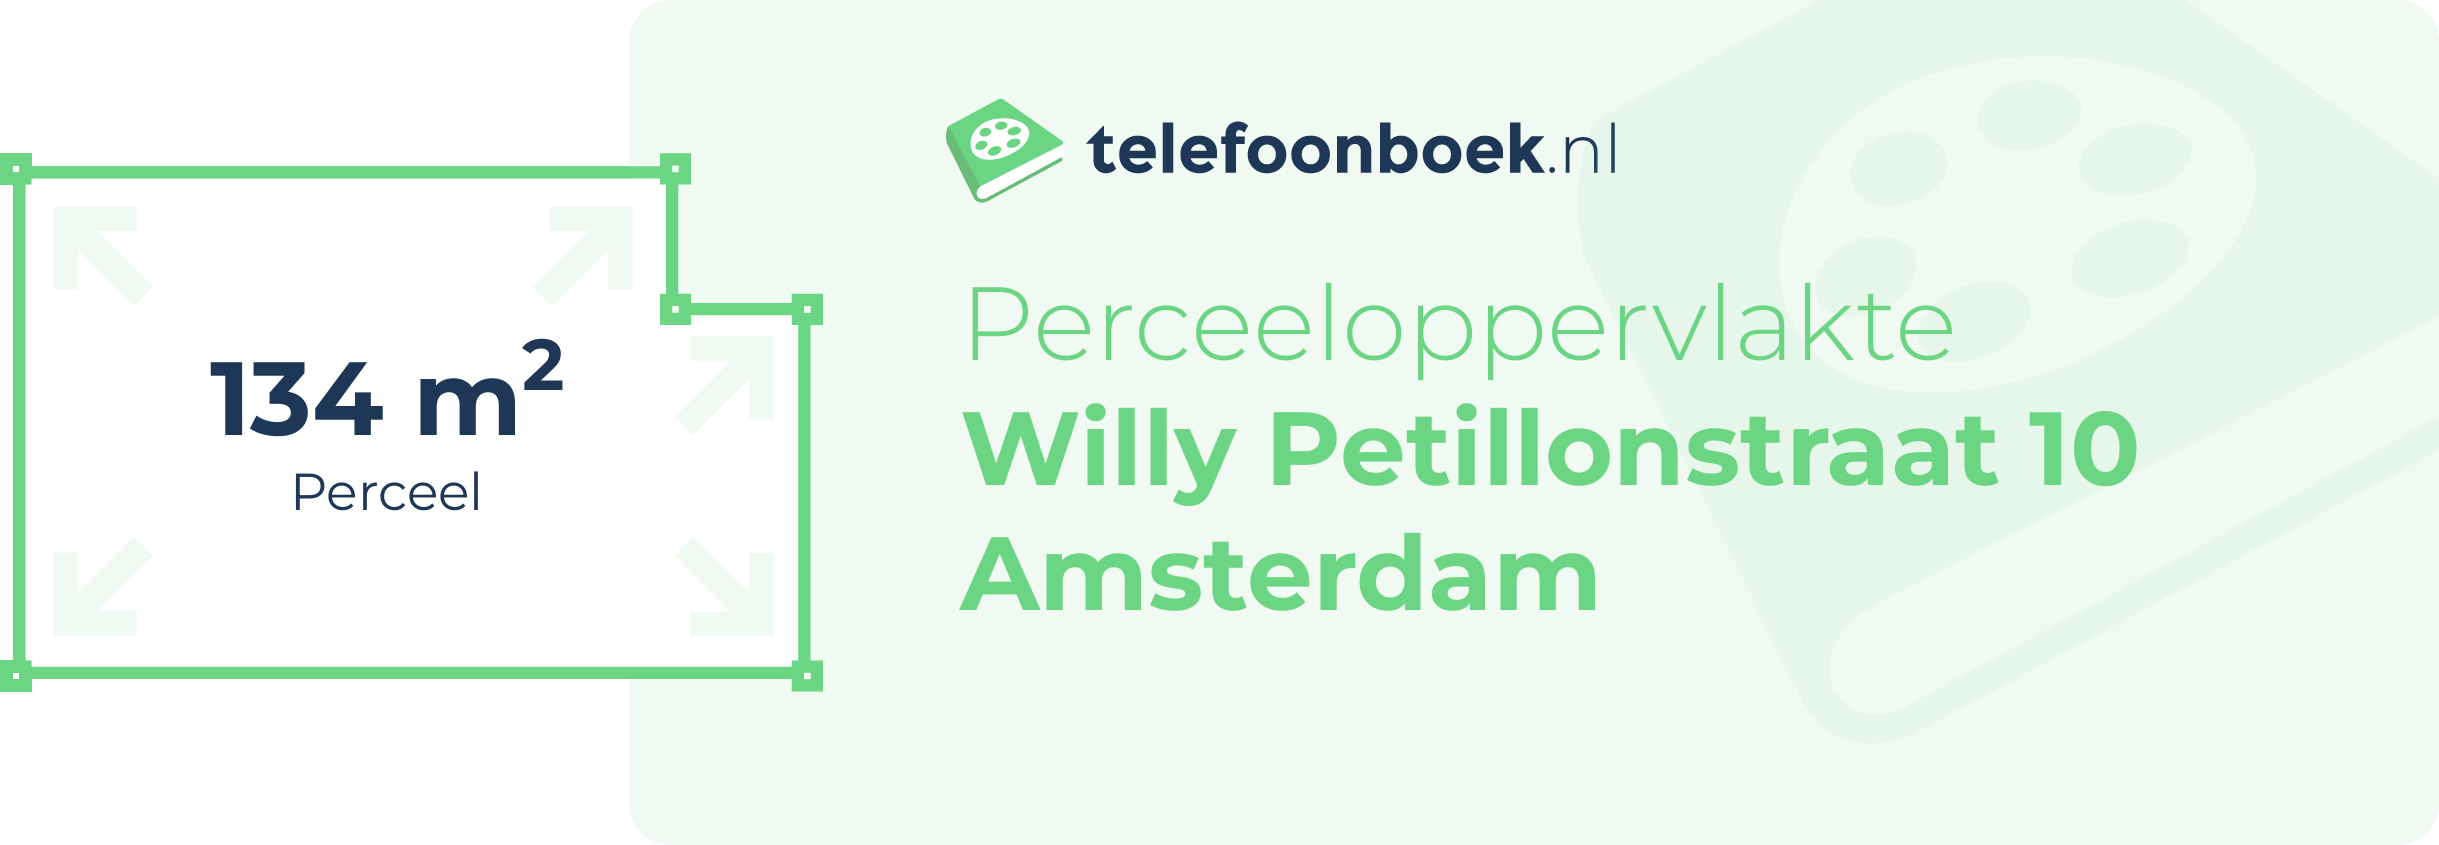 Perceeloppervlakte Willy Petillonstraat 10 Amsterdam